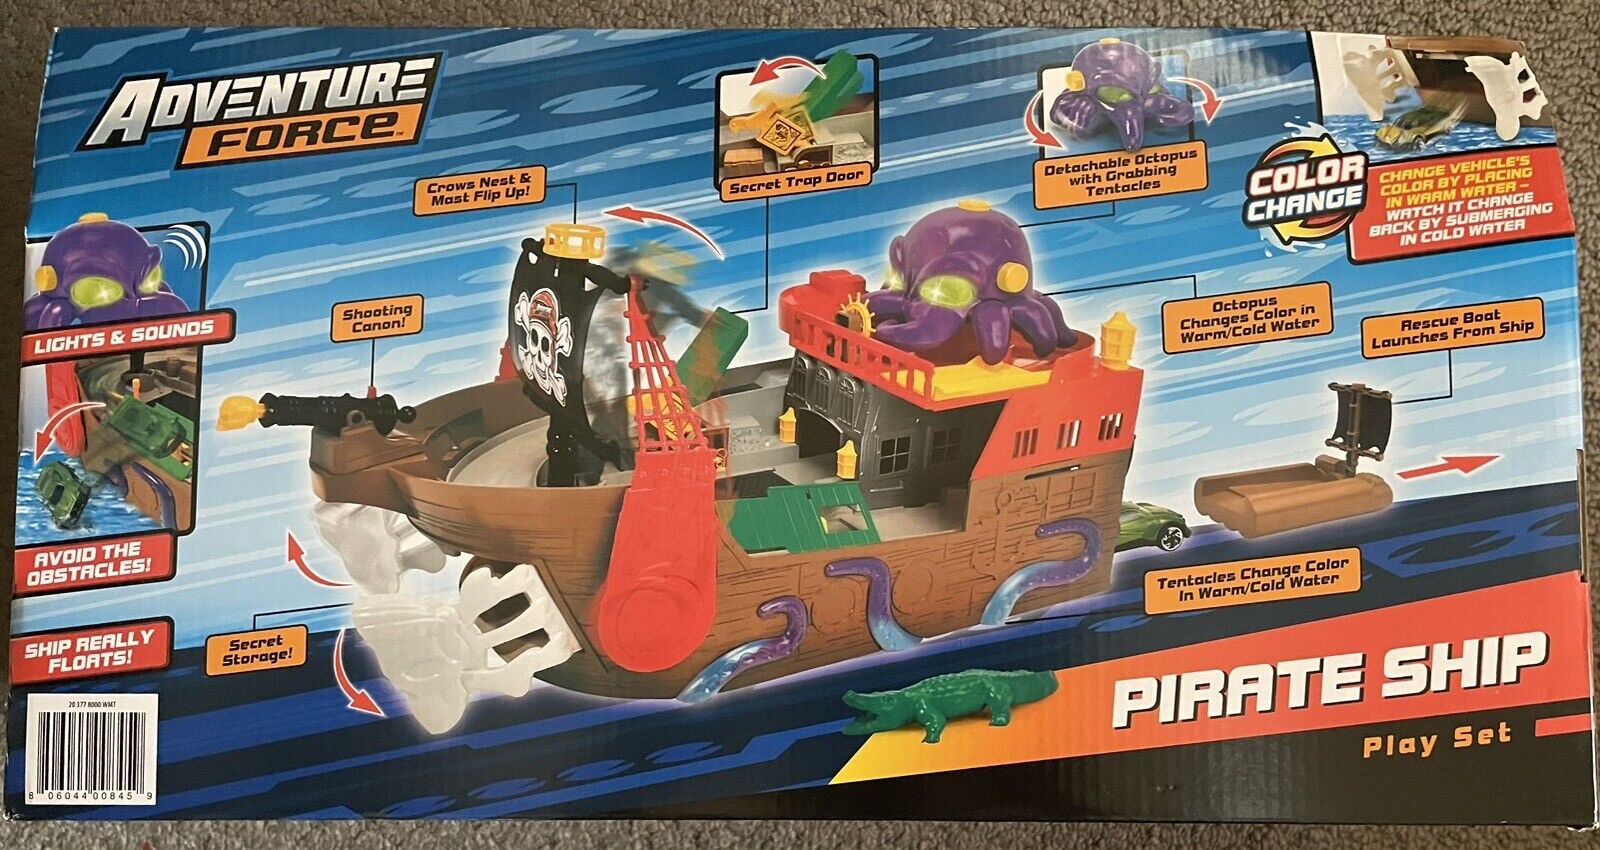 Adventure Force Pirate Ship Die-Cast Vehicle Playset, Multi-Color, Color Change Adventure Force Does not apply - фотография #5